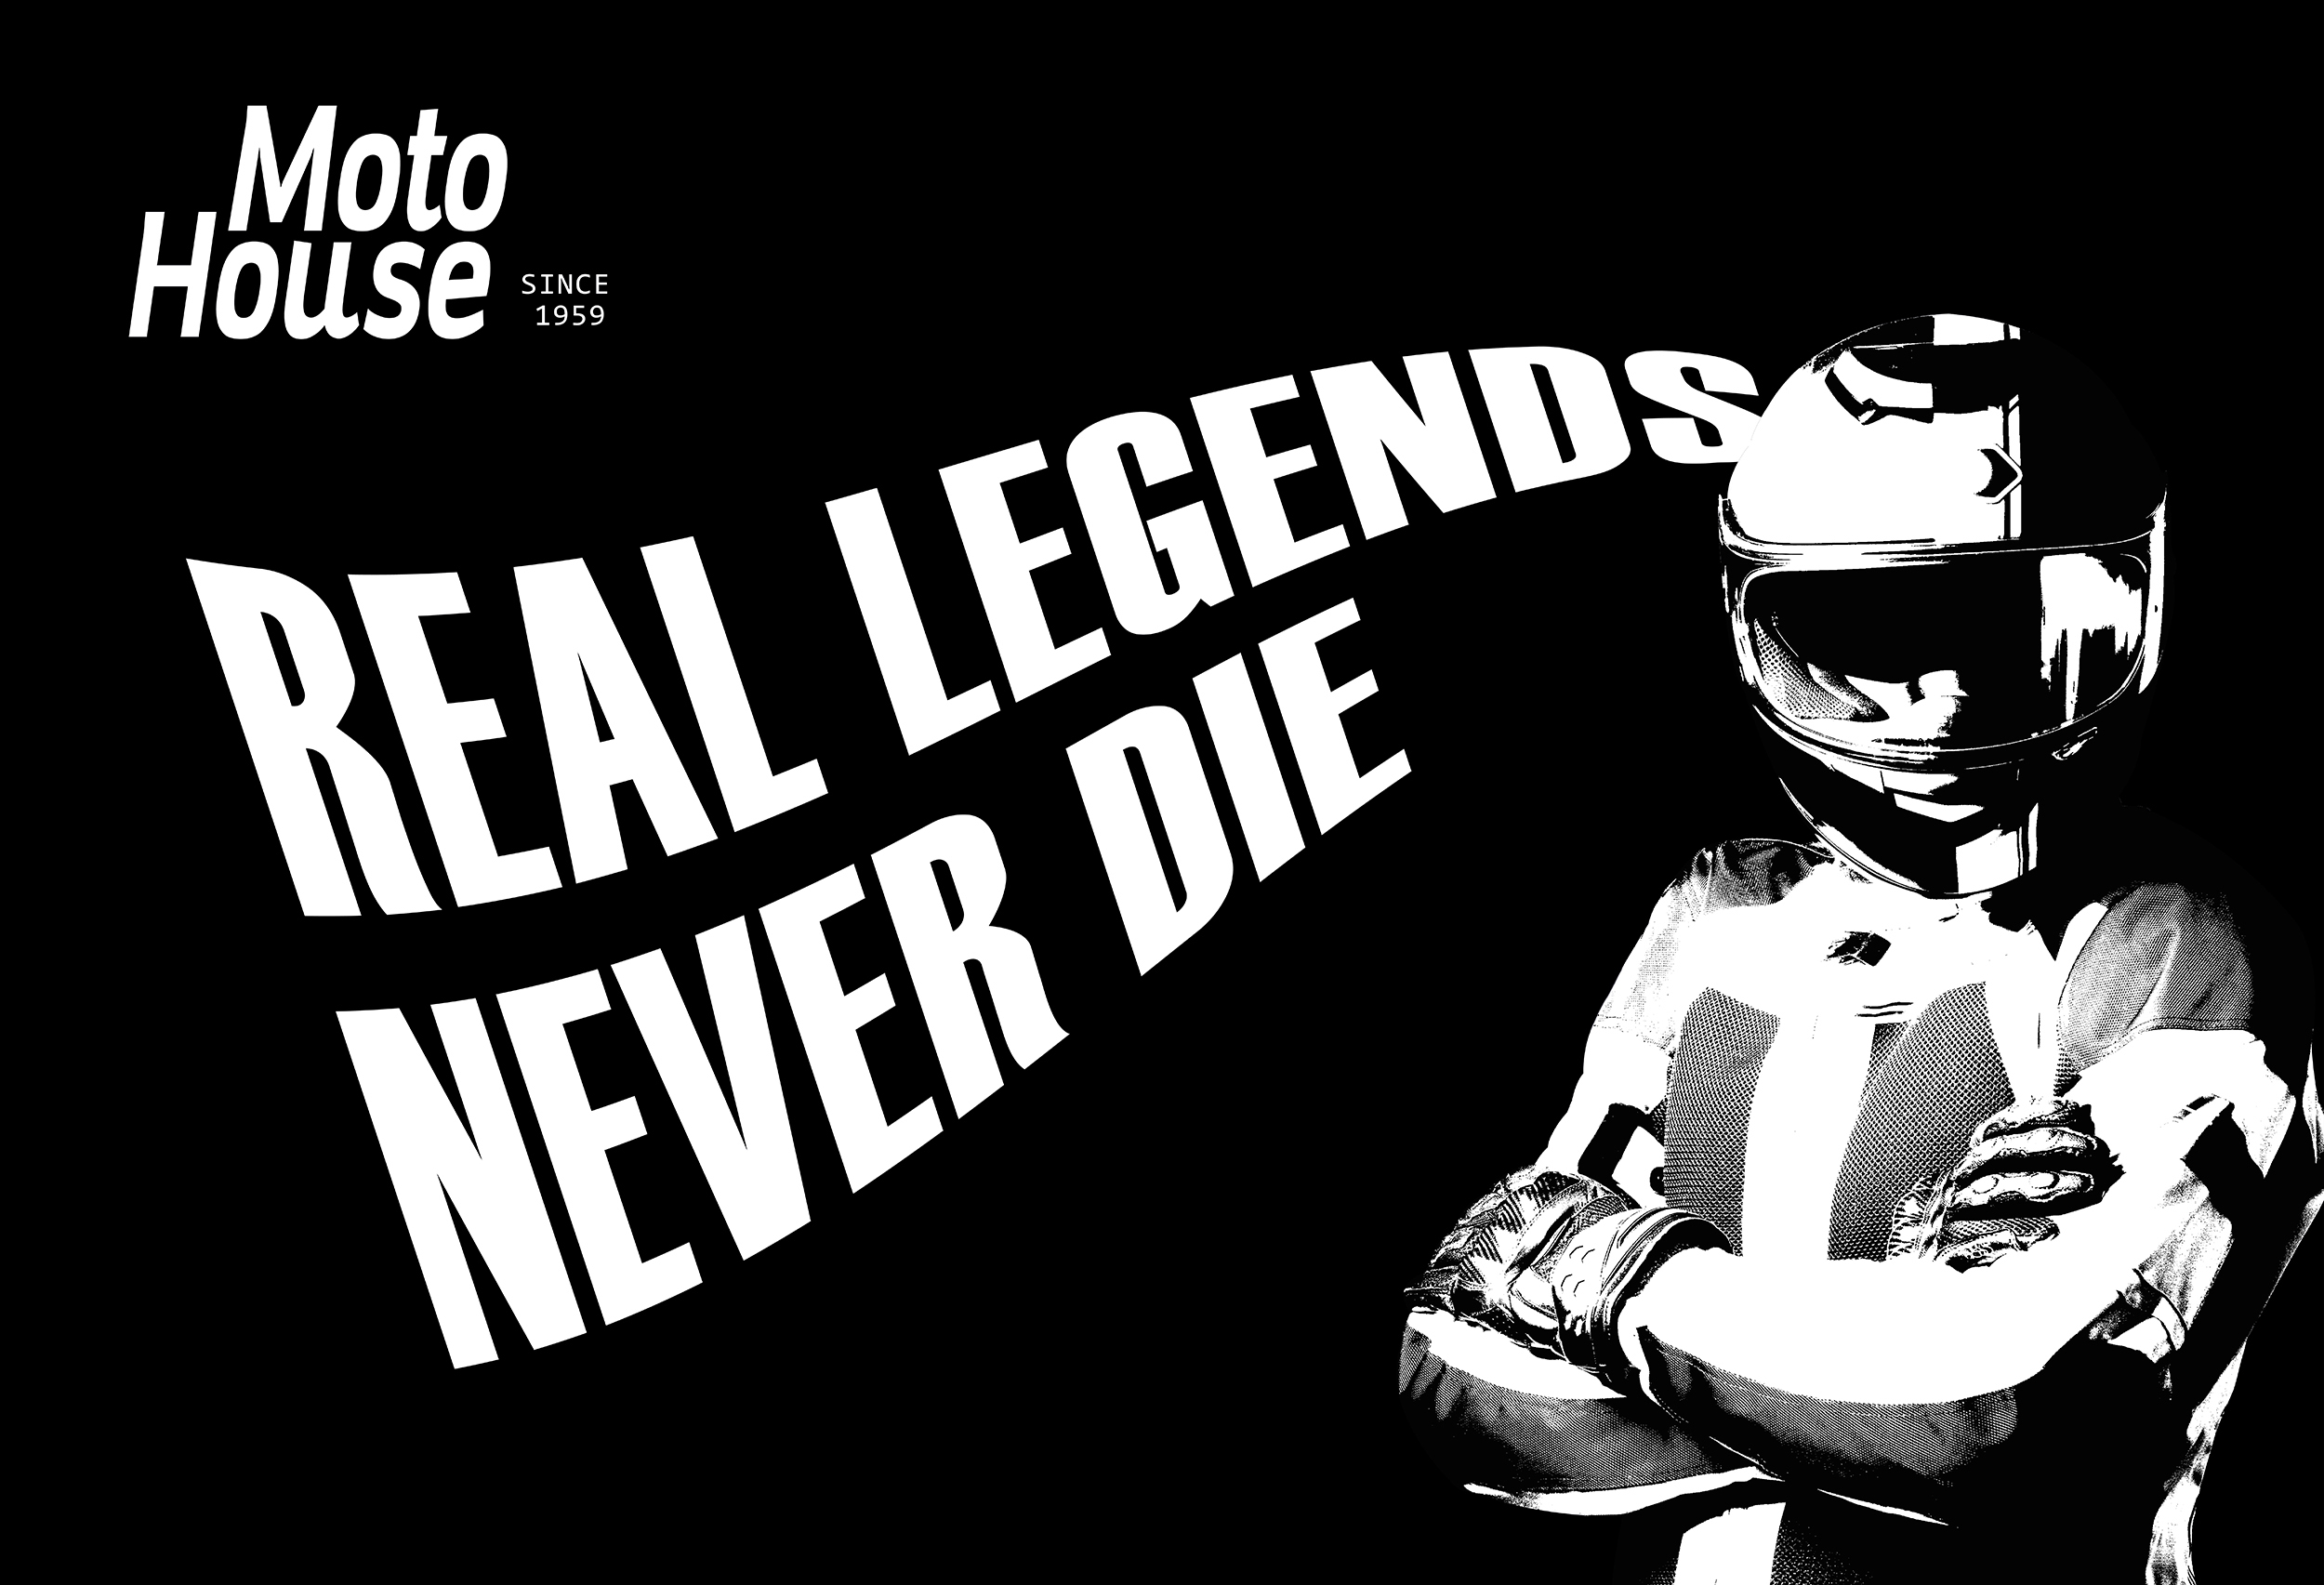 Real legends never die